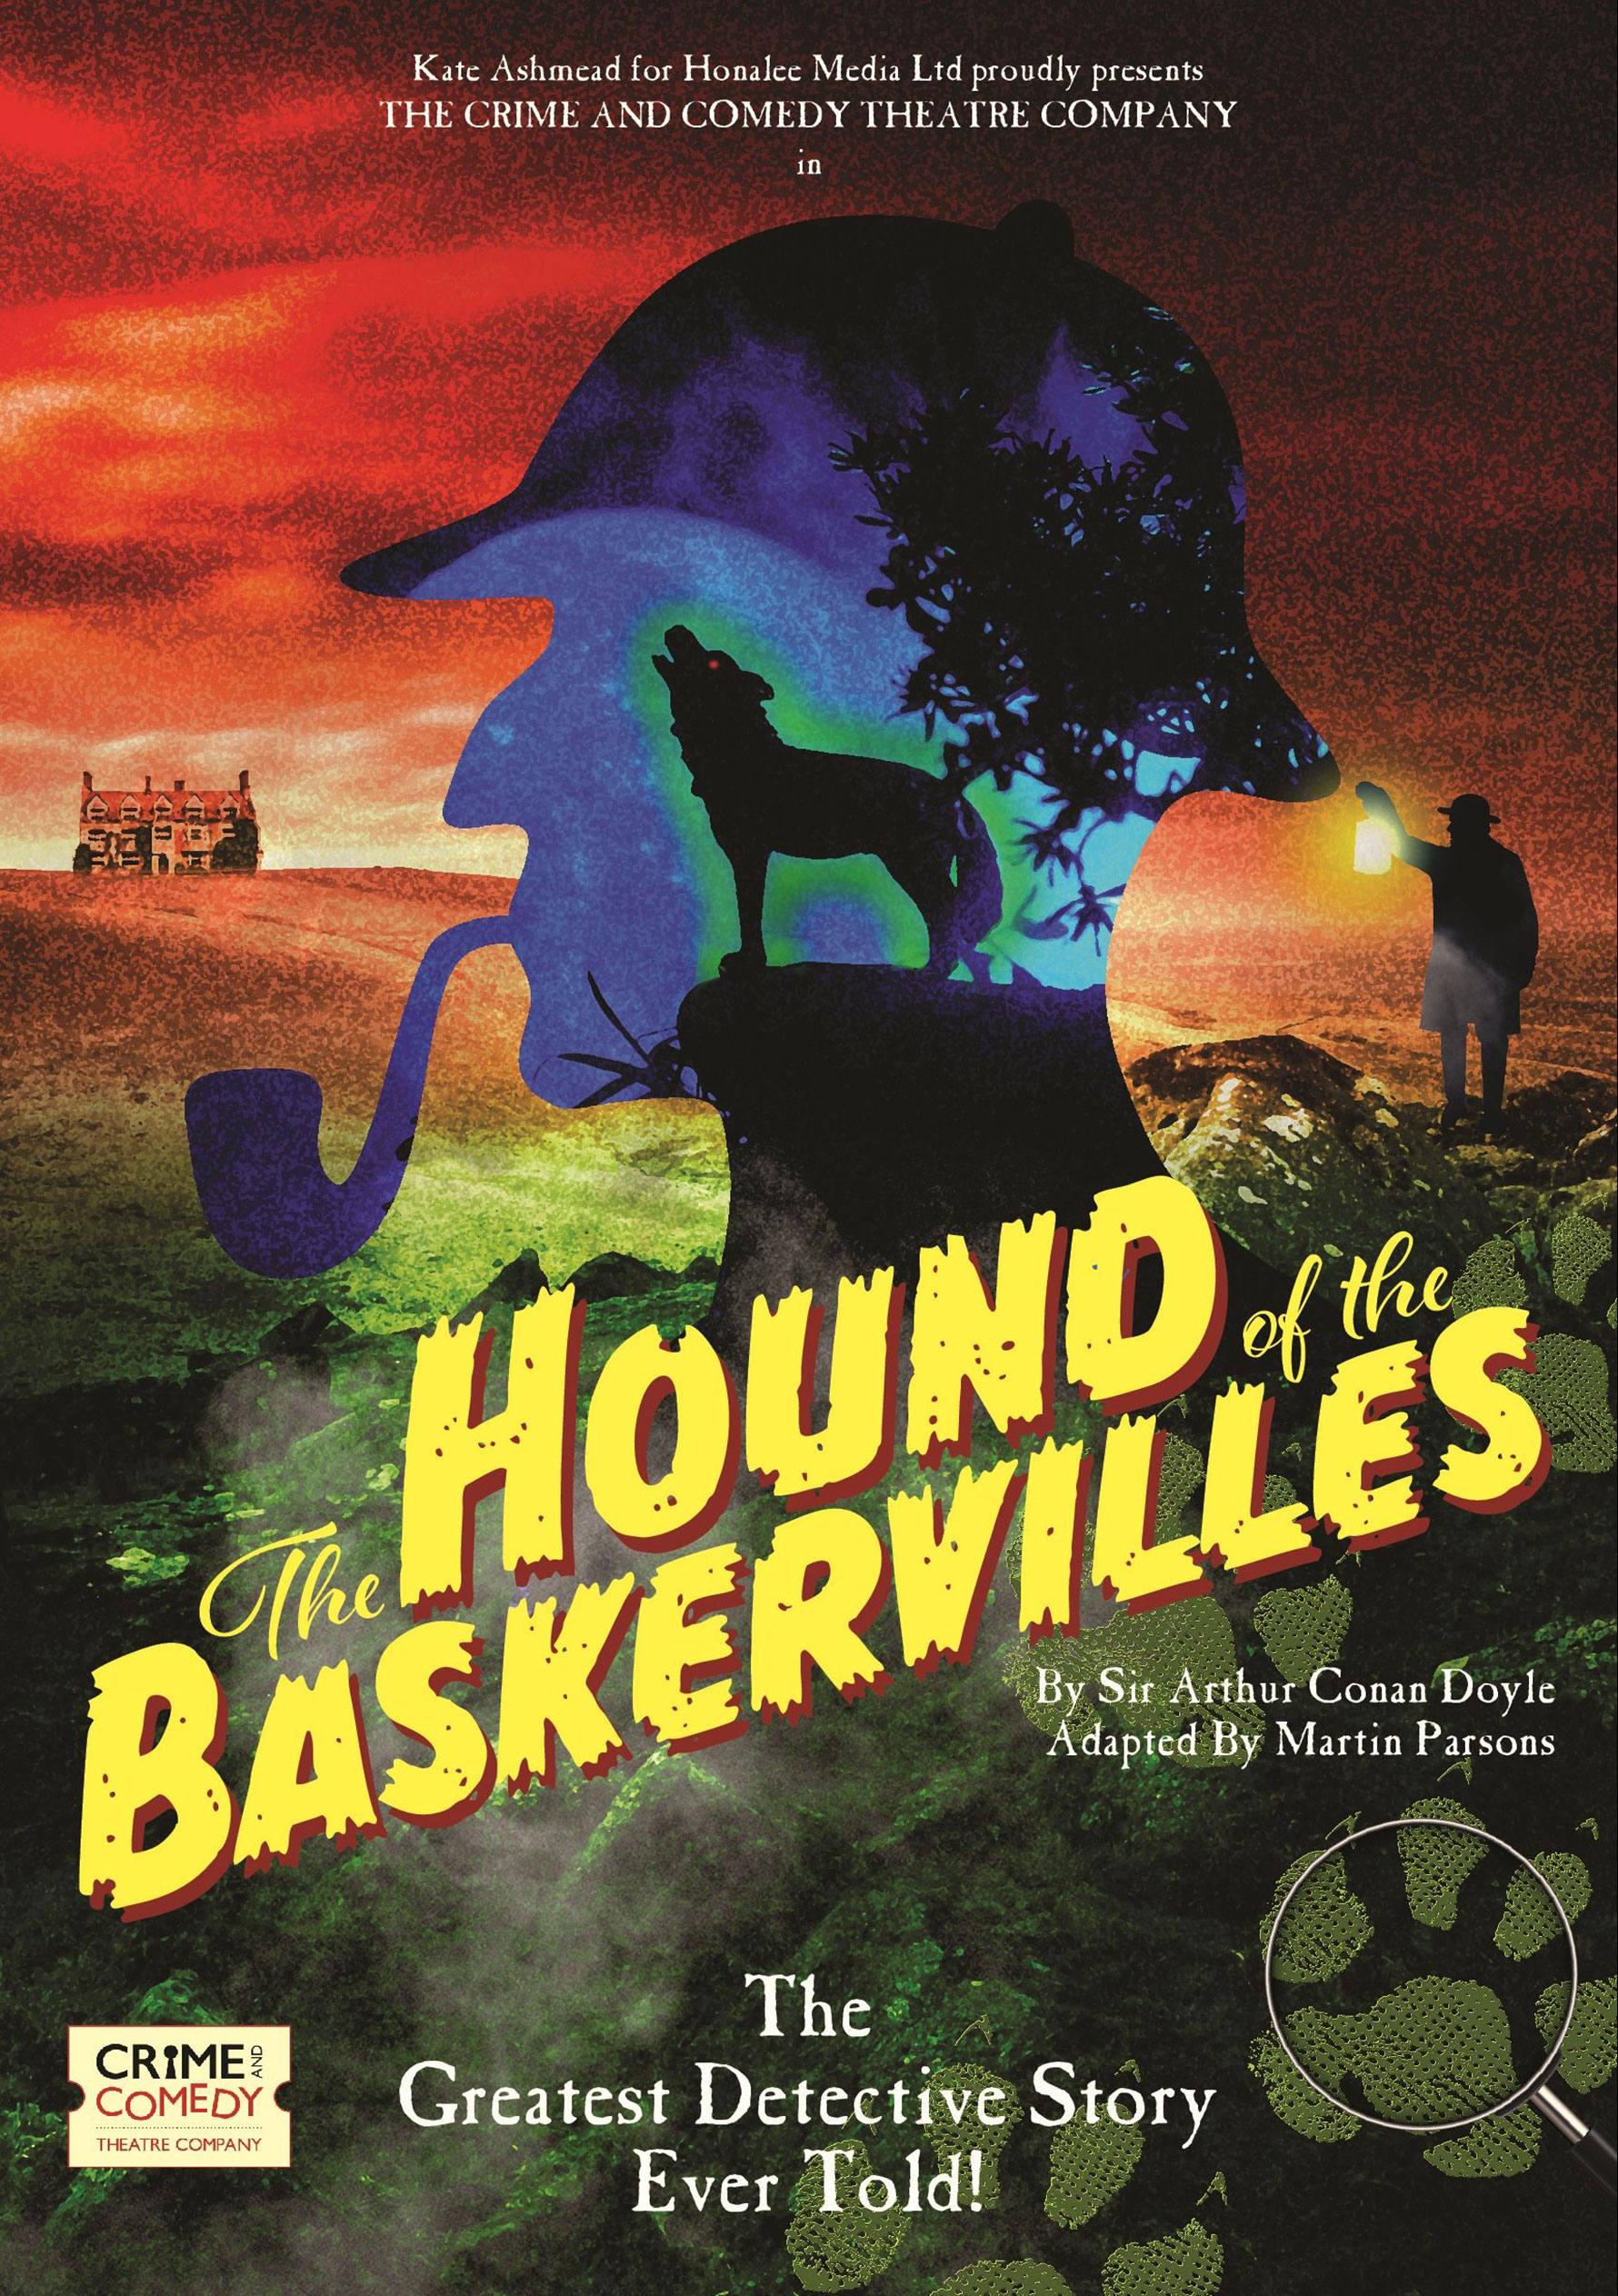 Colin Baker The Hound of the Baskervilles